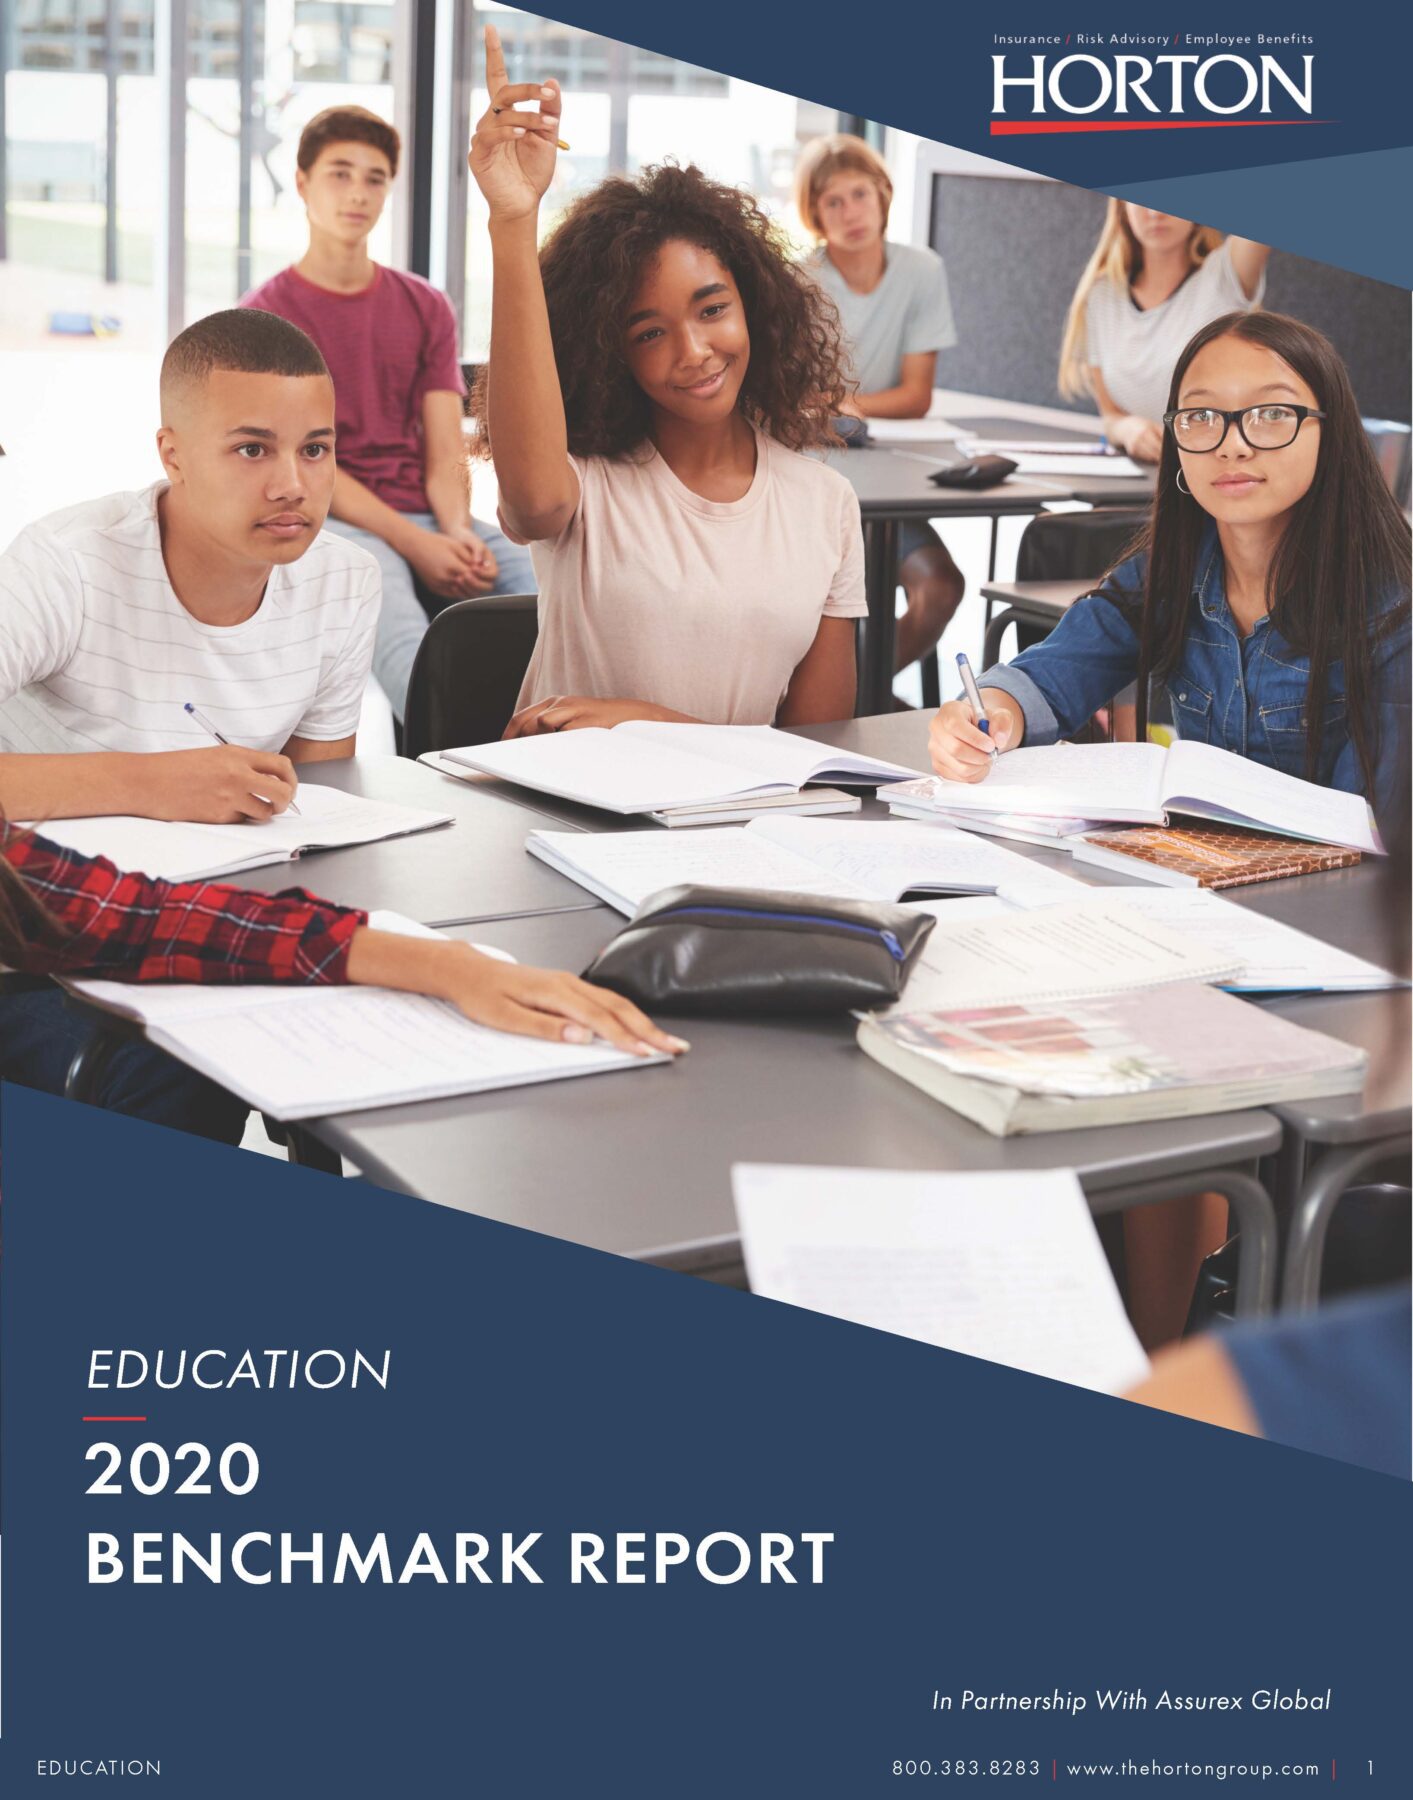 Education: 2020 Benchmark Report